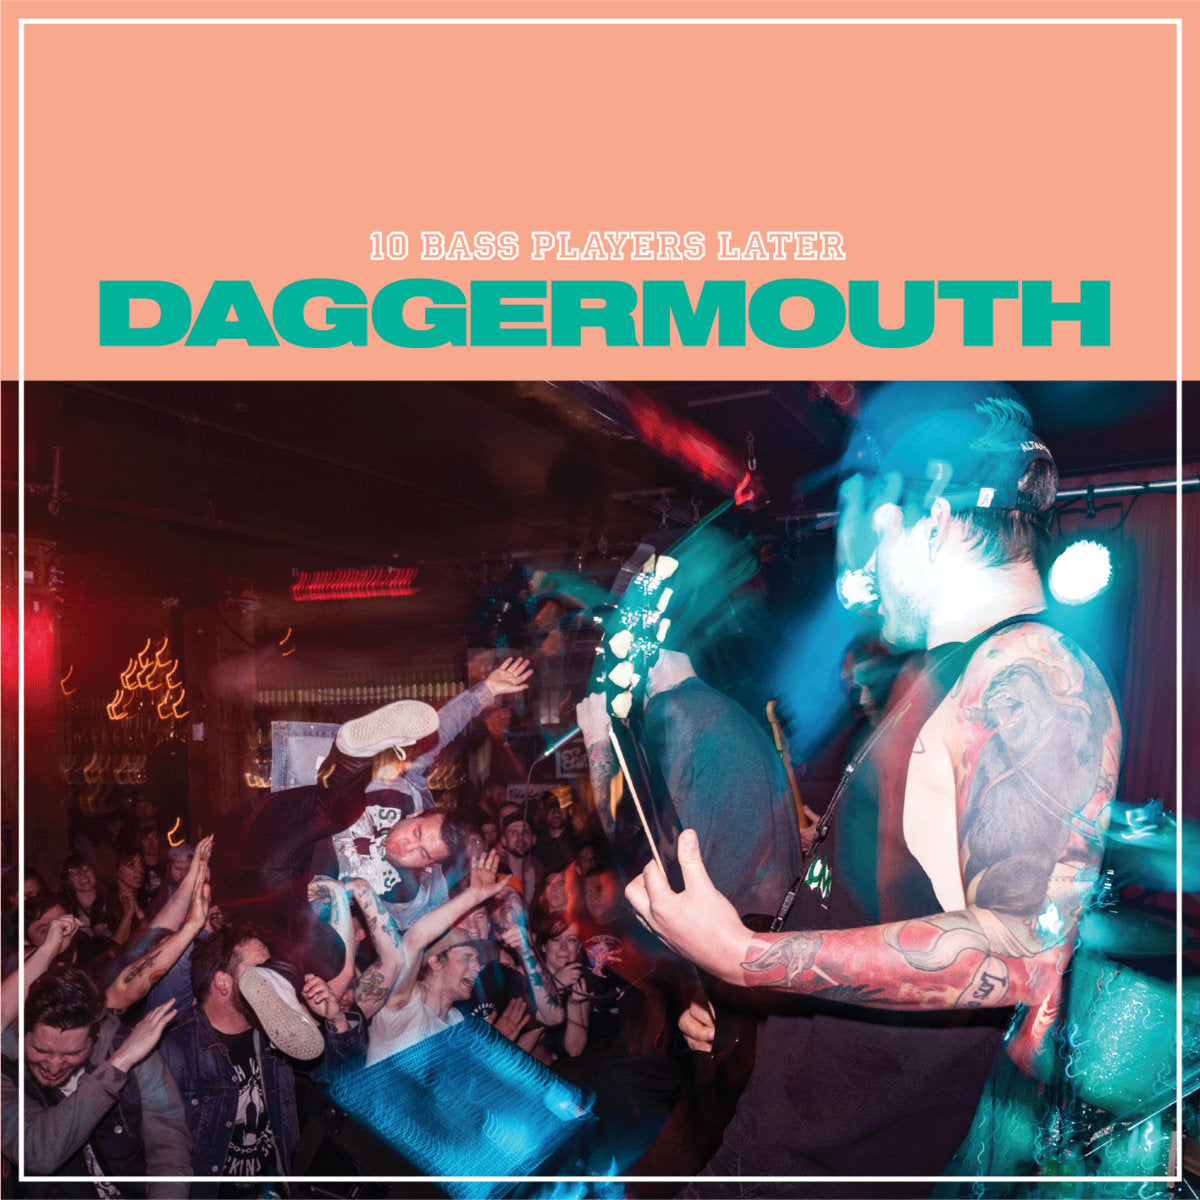 Daggermouth "10 Bass Players Later" CD